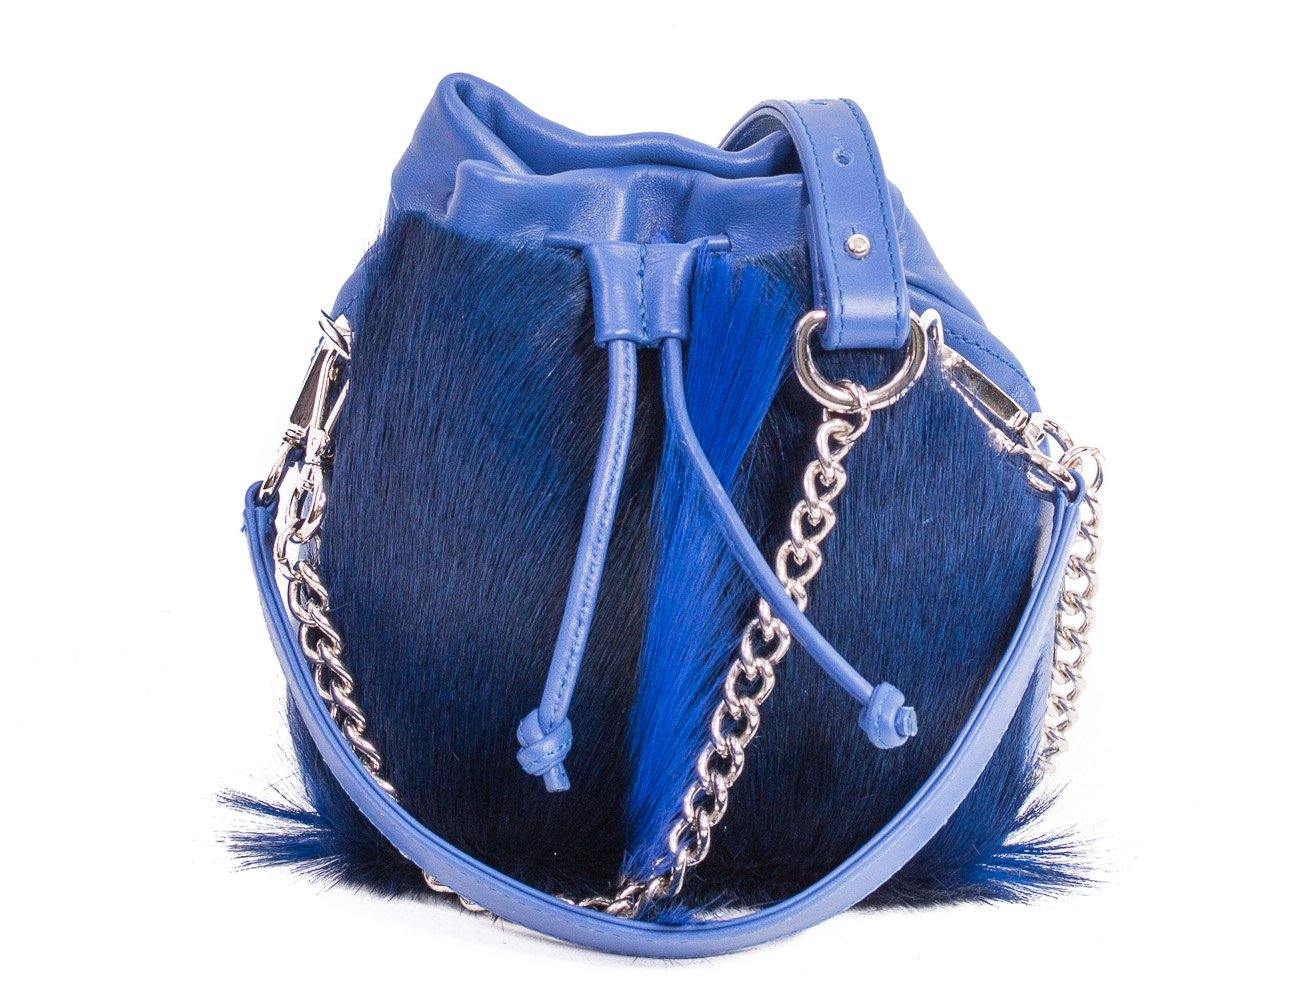 sherene melinda springbok hair-on-hide royal blue leather pouch bag fan front strap